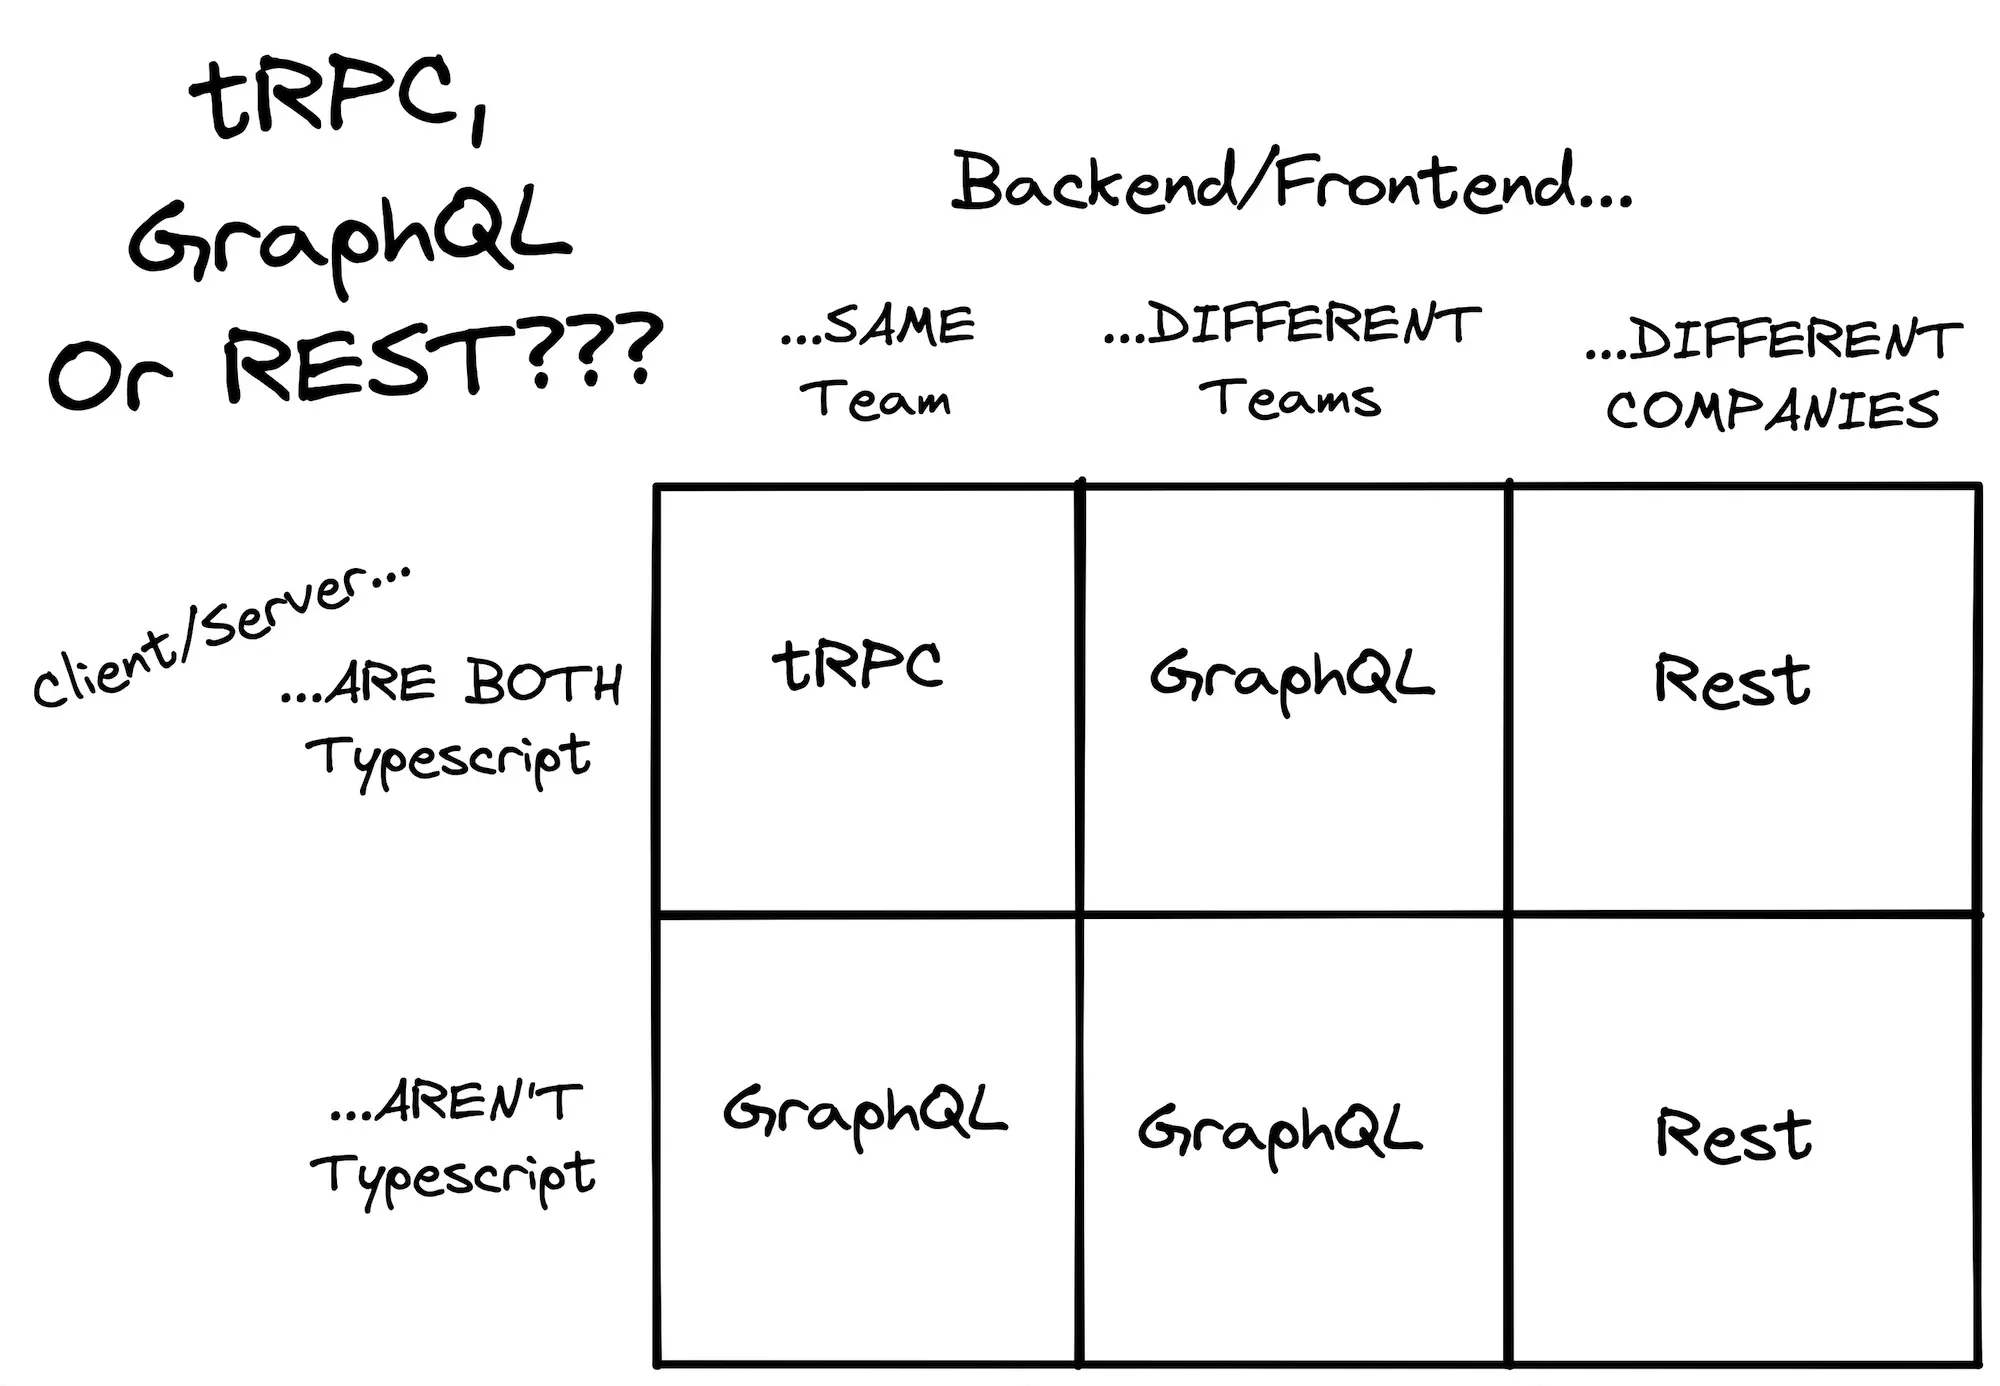 02 - Theo tRPC vs GraphQL Tweet